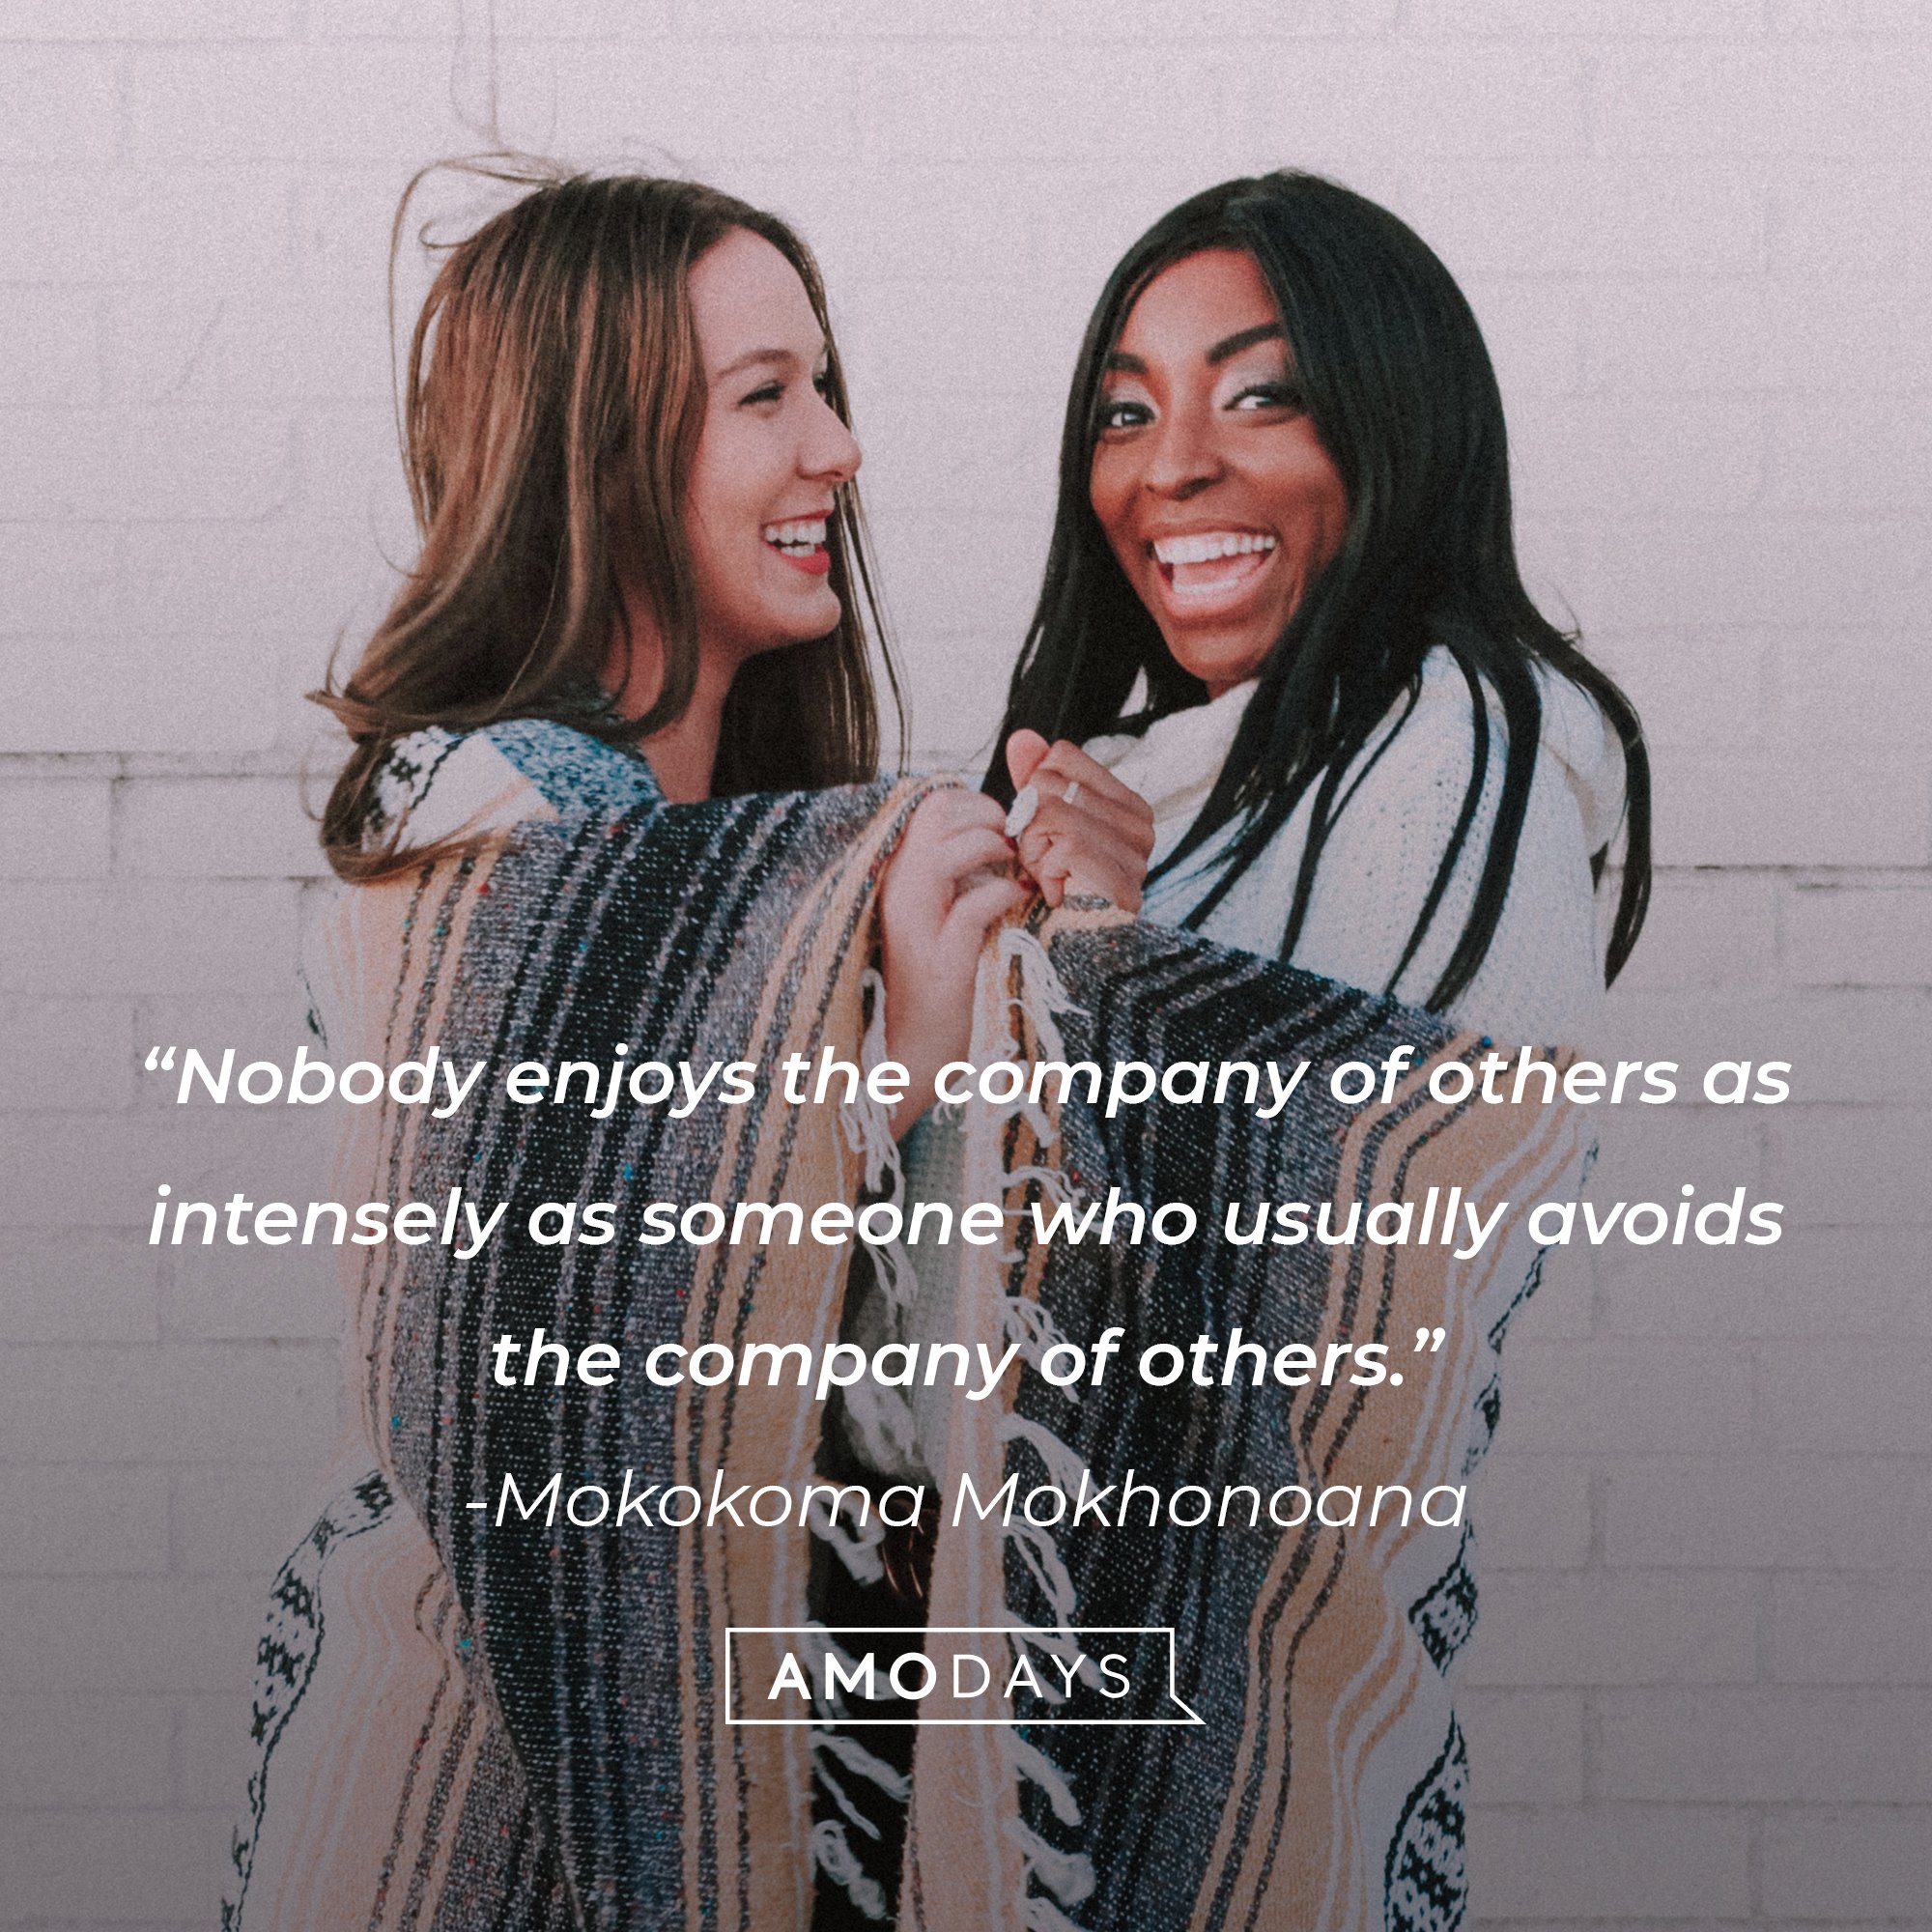 Mokokoma Mokhonoana's quote: “Nobody enjoys the company of others as intensely as someone who usually avoids the company of others.” | Image: AmoDays